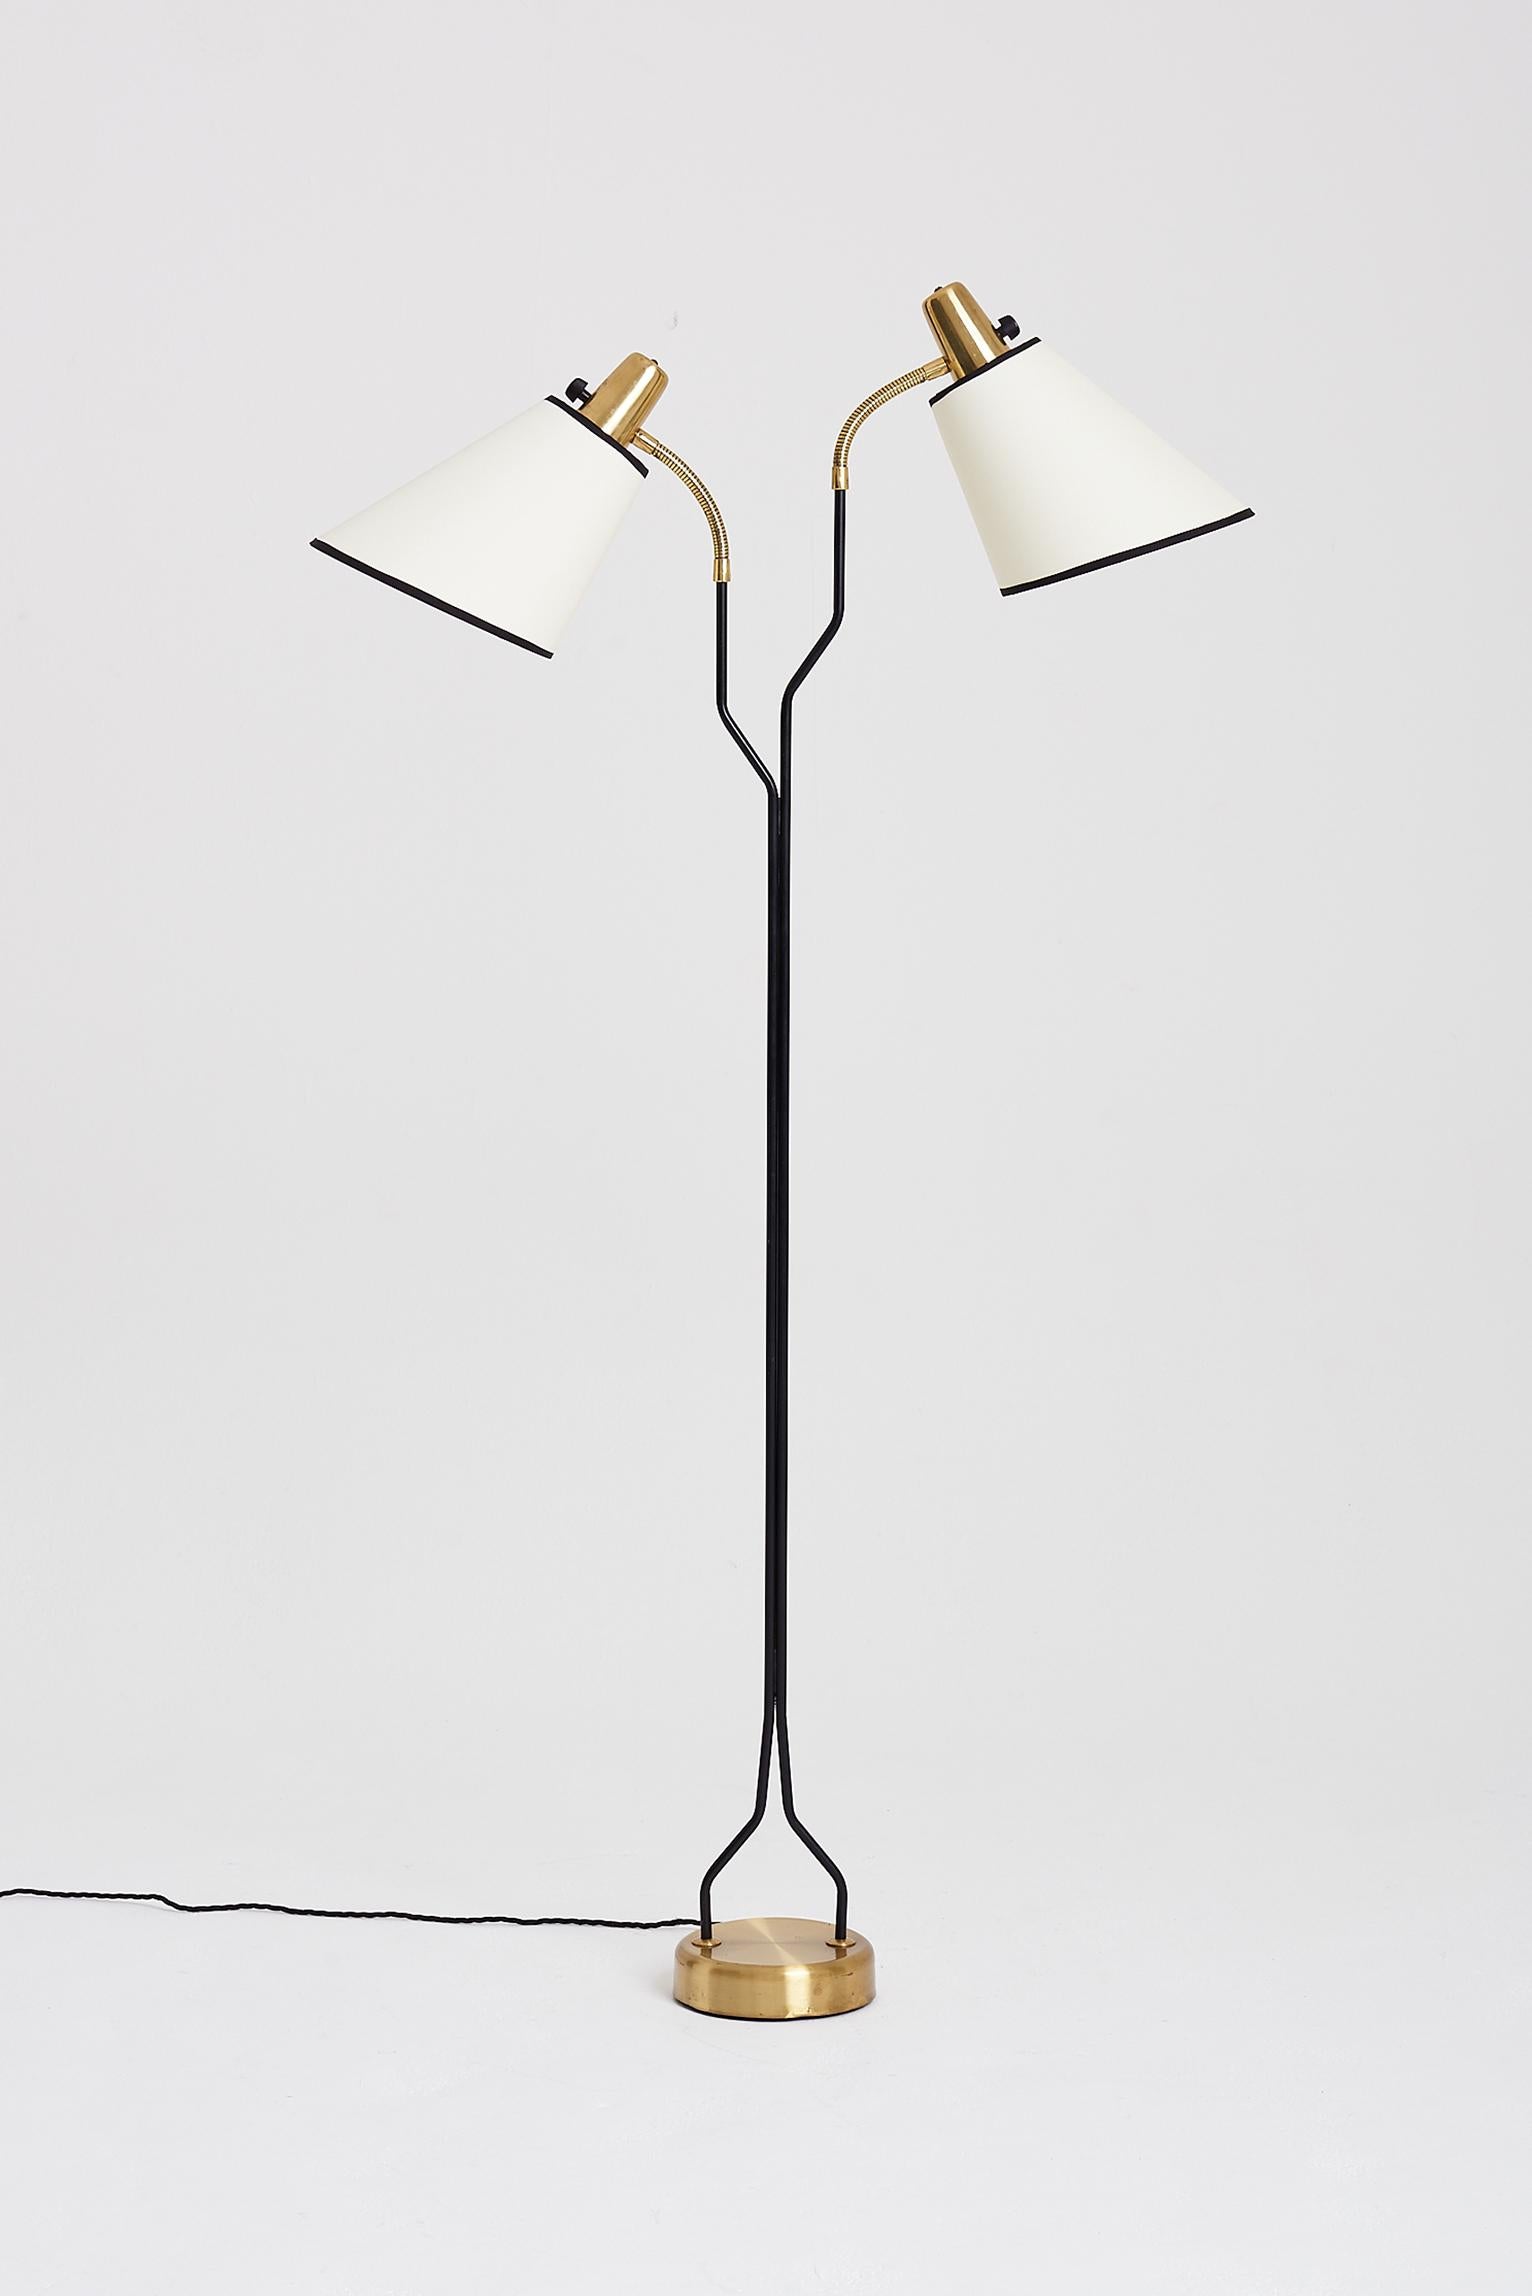 Swedish Brass and Black Two-Armed Floor Lamp by Eskilstuna Elektrofabrik